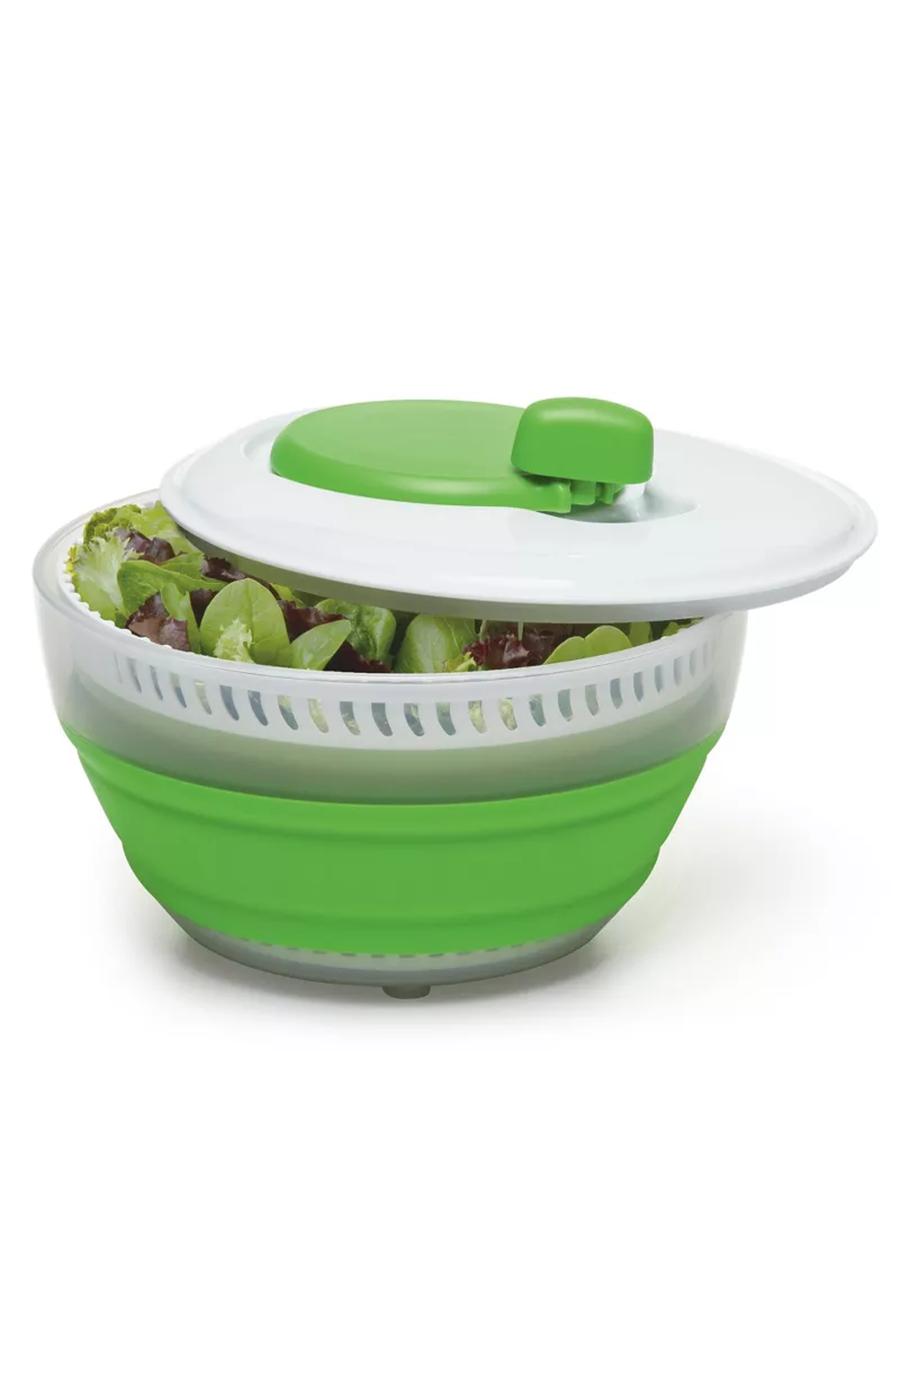 PrepWorks Collapsible Salad Spinner; image 2 of 3